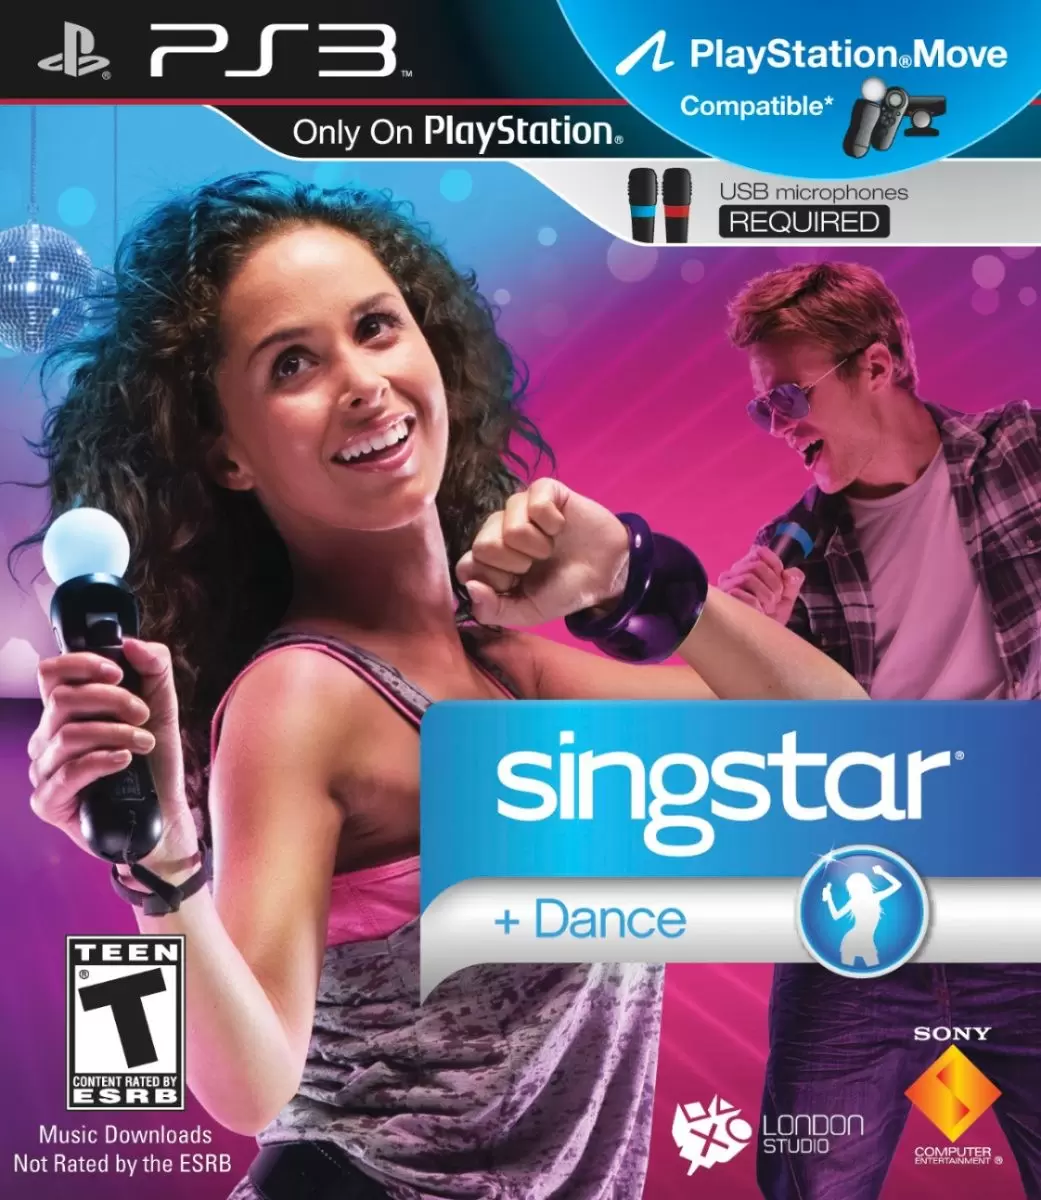 PS3 Games - SingStar Dance